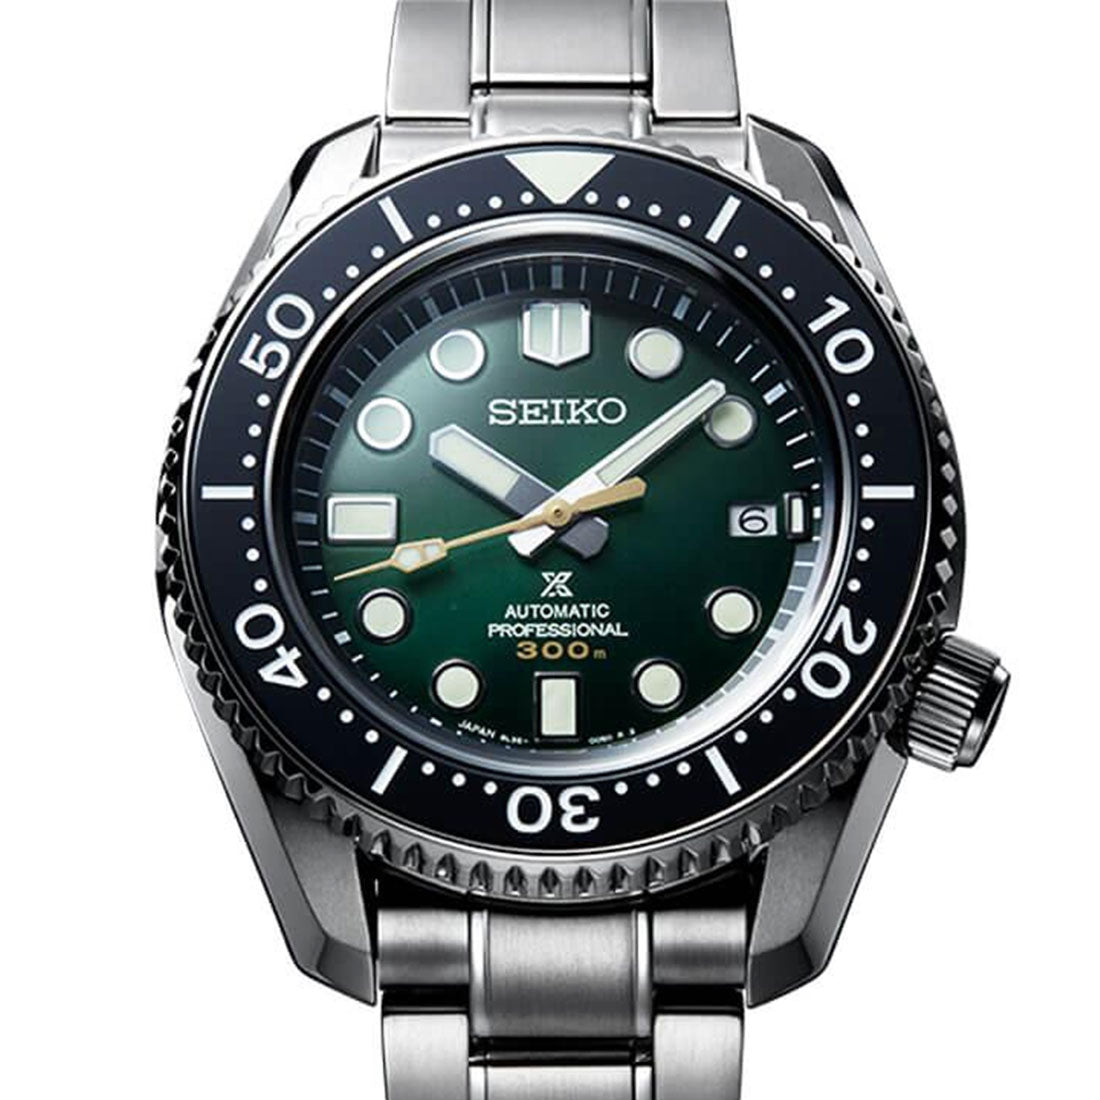 Seiko Prospex Marinemaster JDM Divers Watch SBDX043 